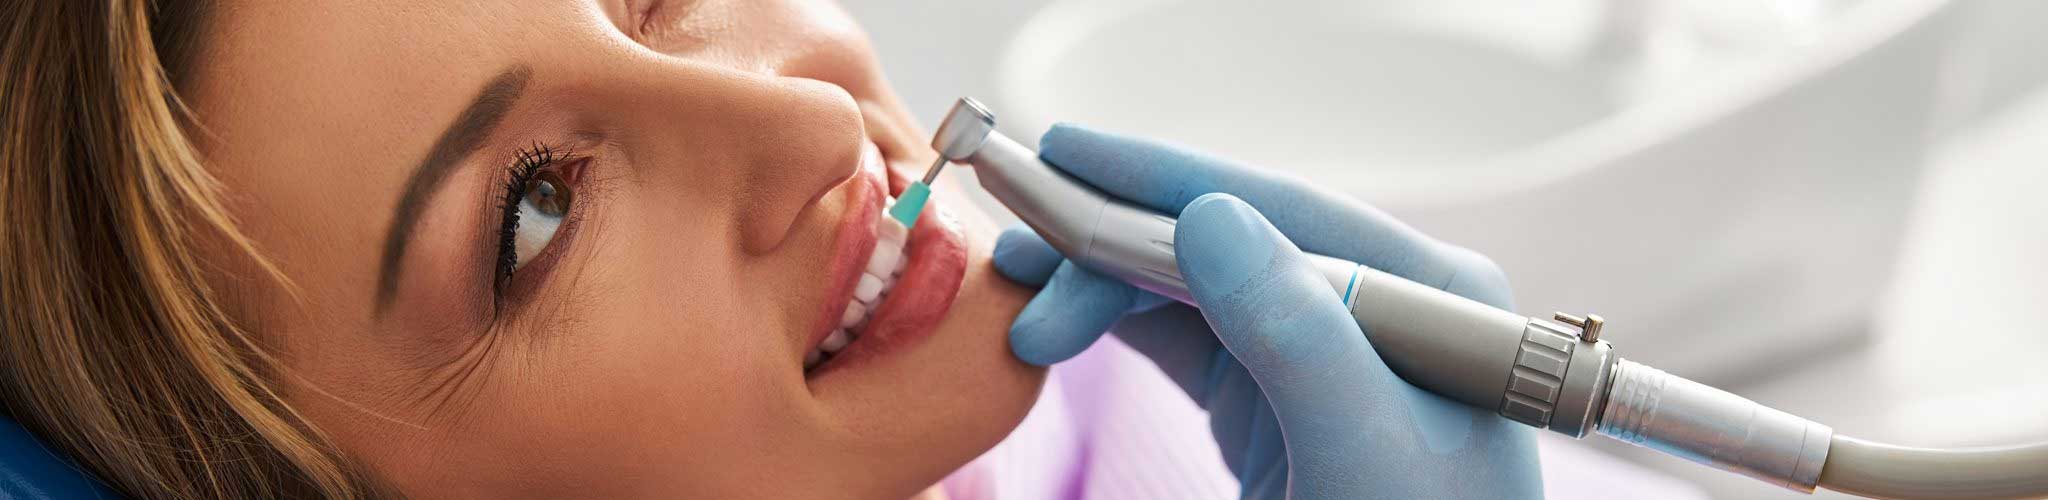 Scaling and Polishing - DentisTree Dental Clinic